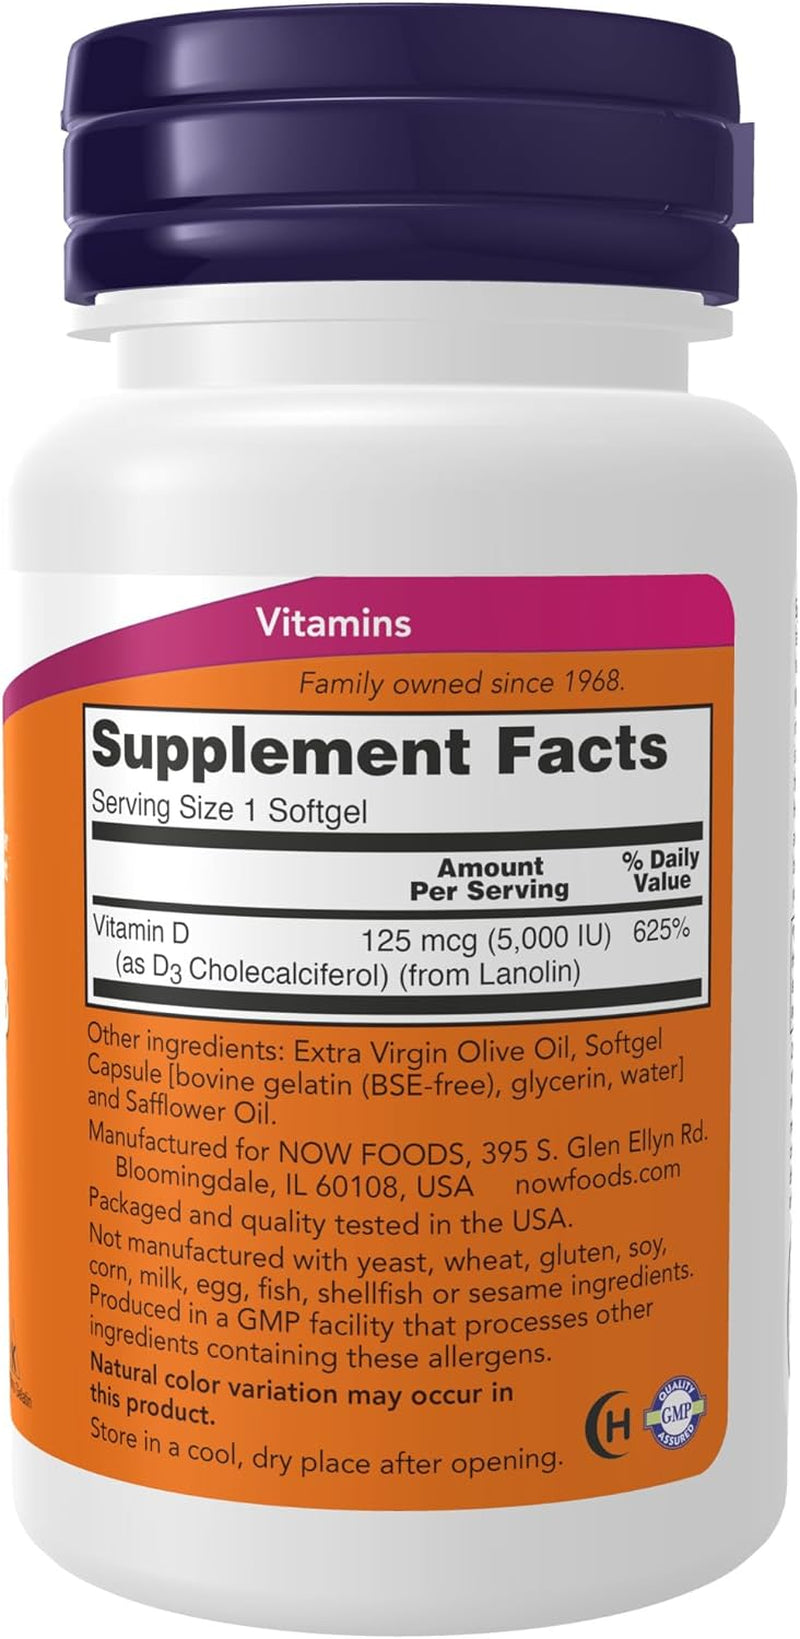 Supplements, Vitamin D-3 5,000 IU, High Potency, Structural Support*, 240 Softgels